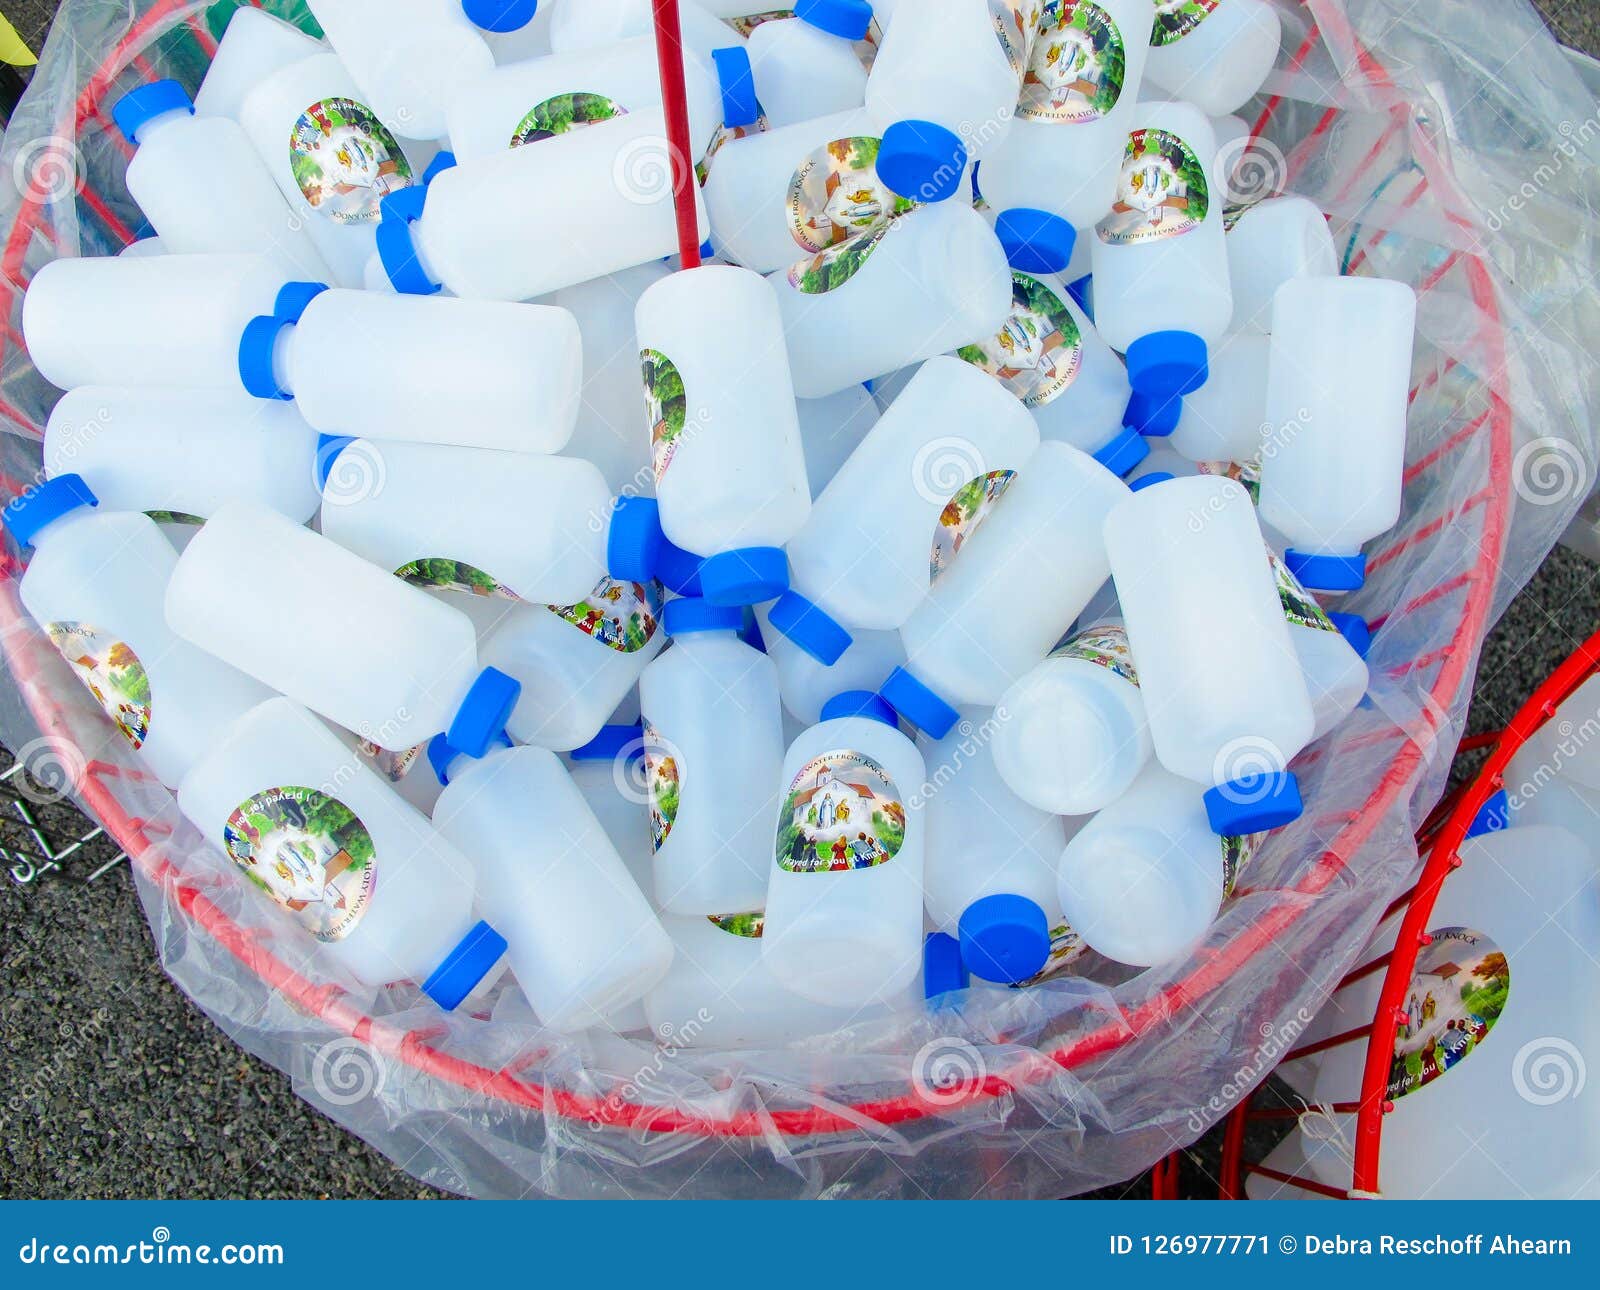 Basket Of Holy Water Bottles Stock Image Image of